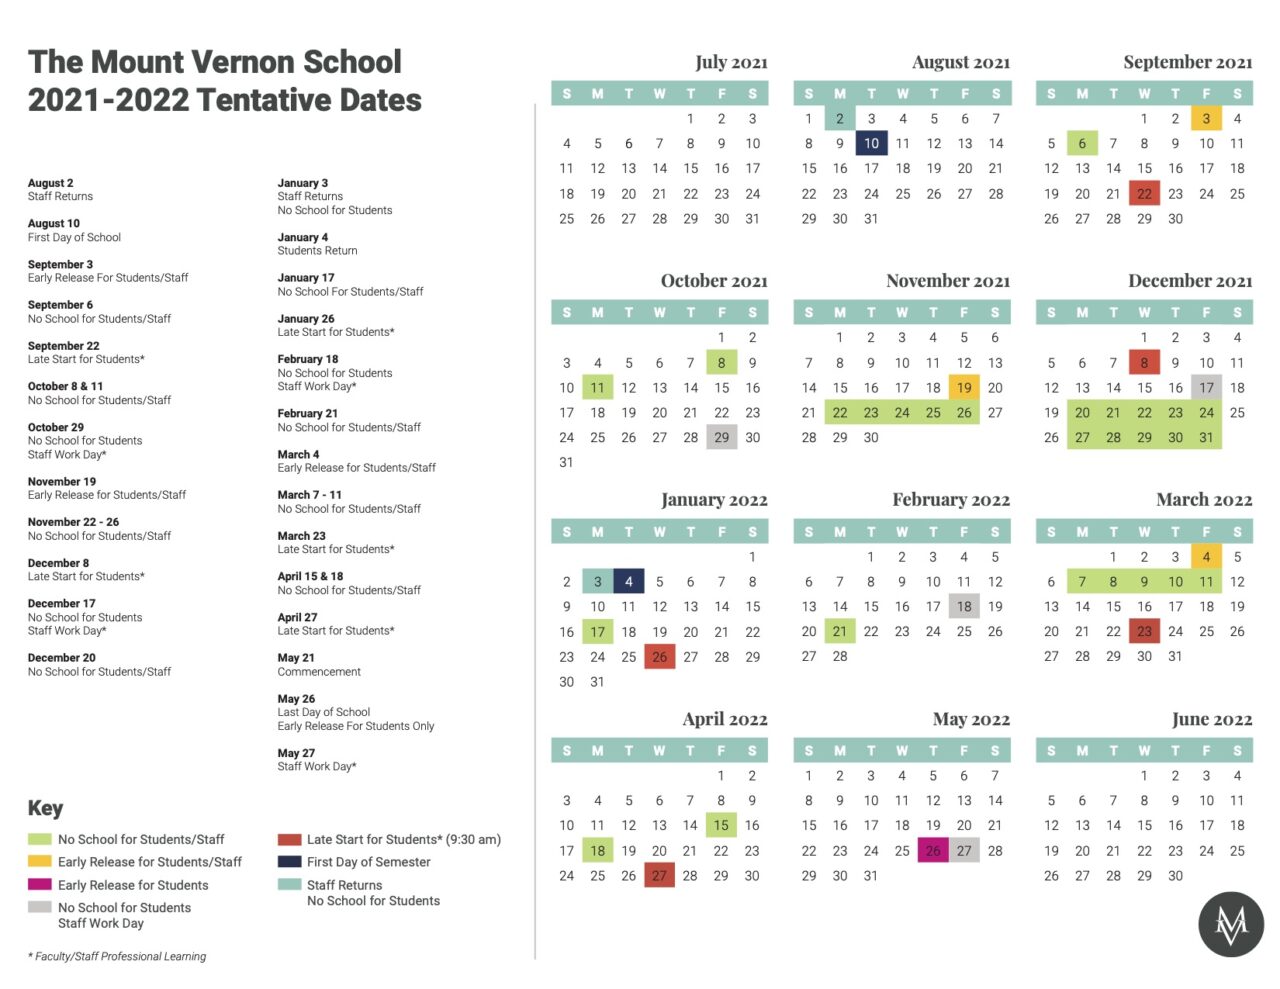 Key Calendar Dates 20212022 Mount Vernon School